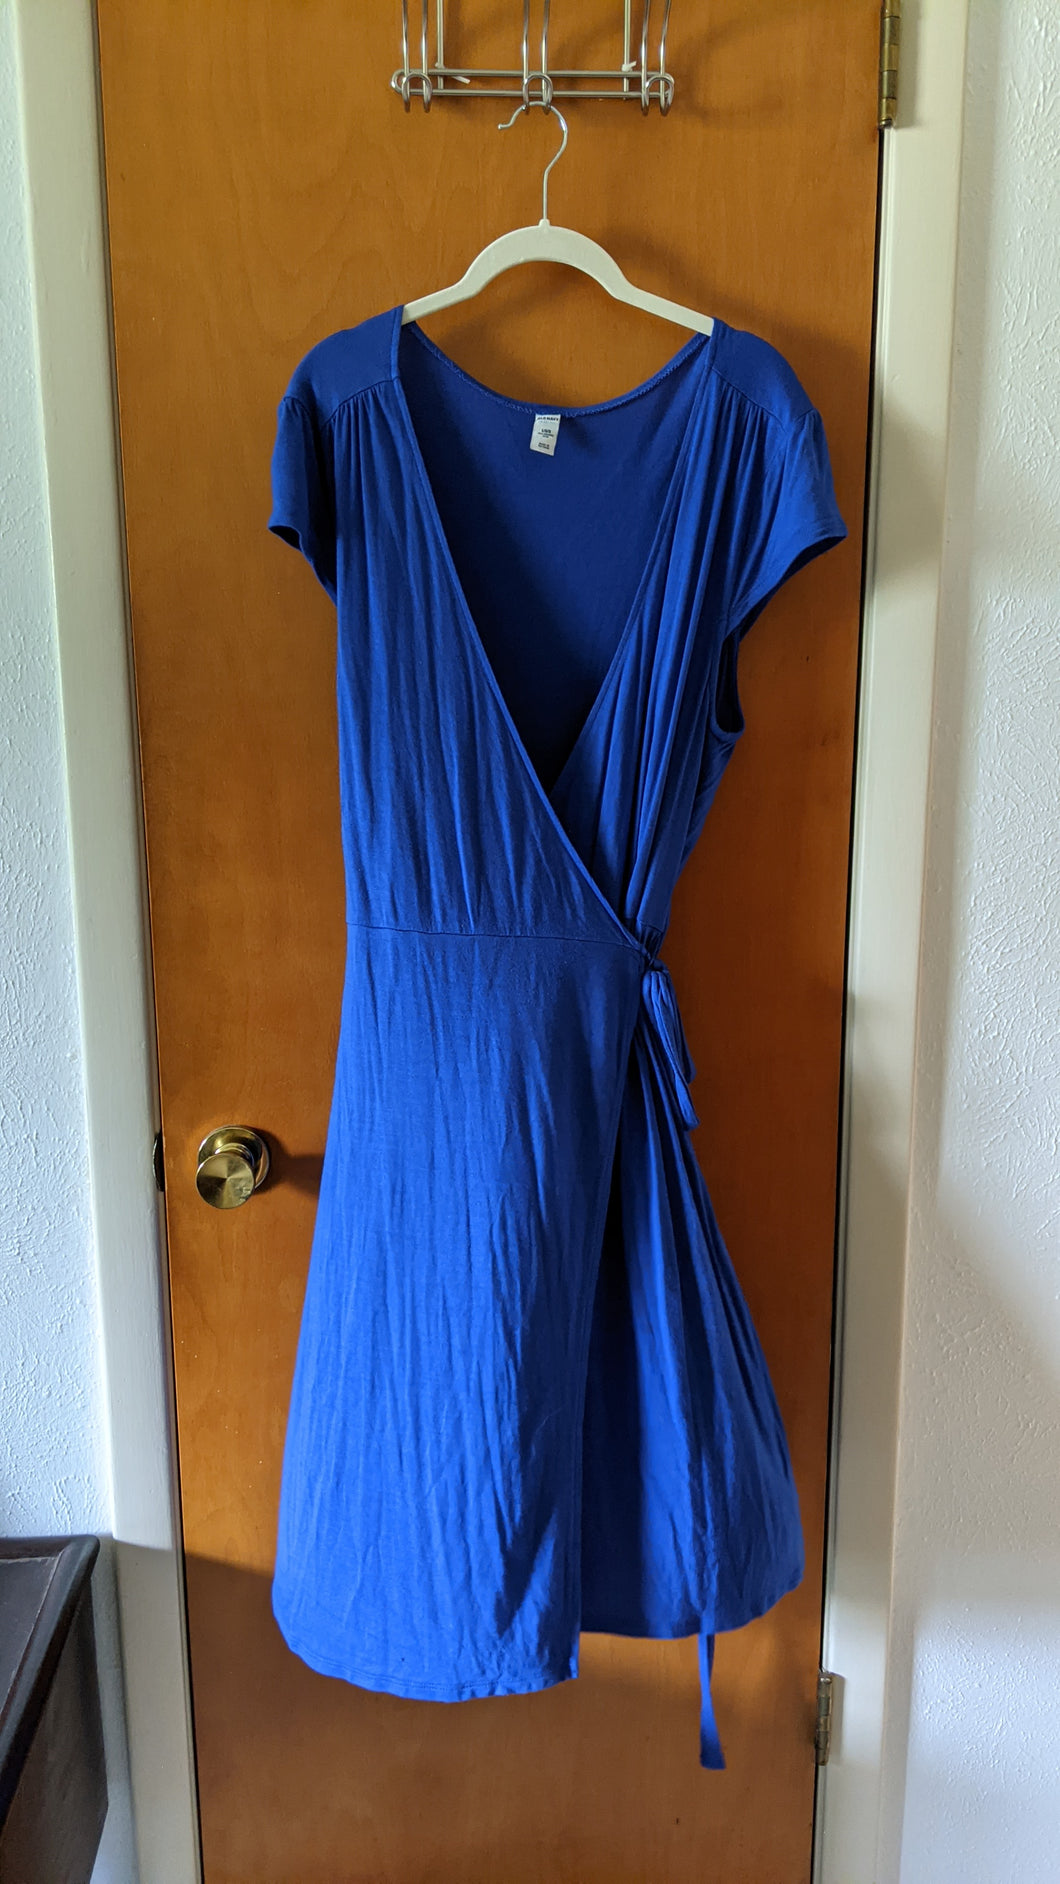 L - Old Navy blue wrap dress